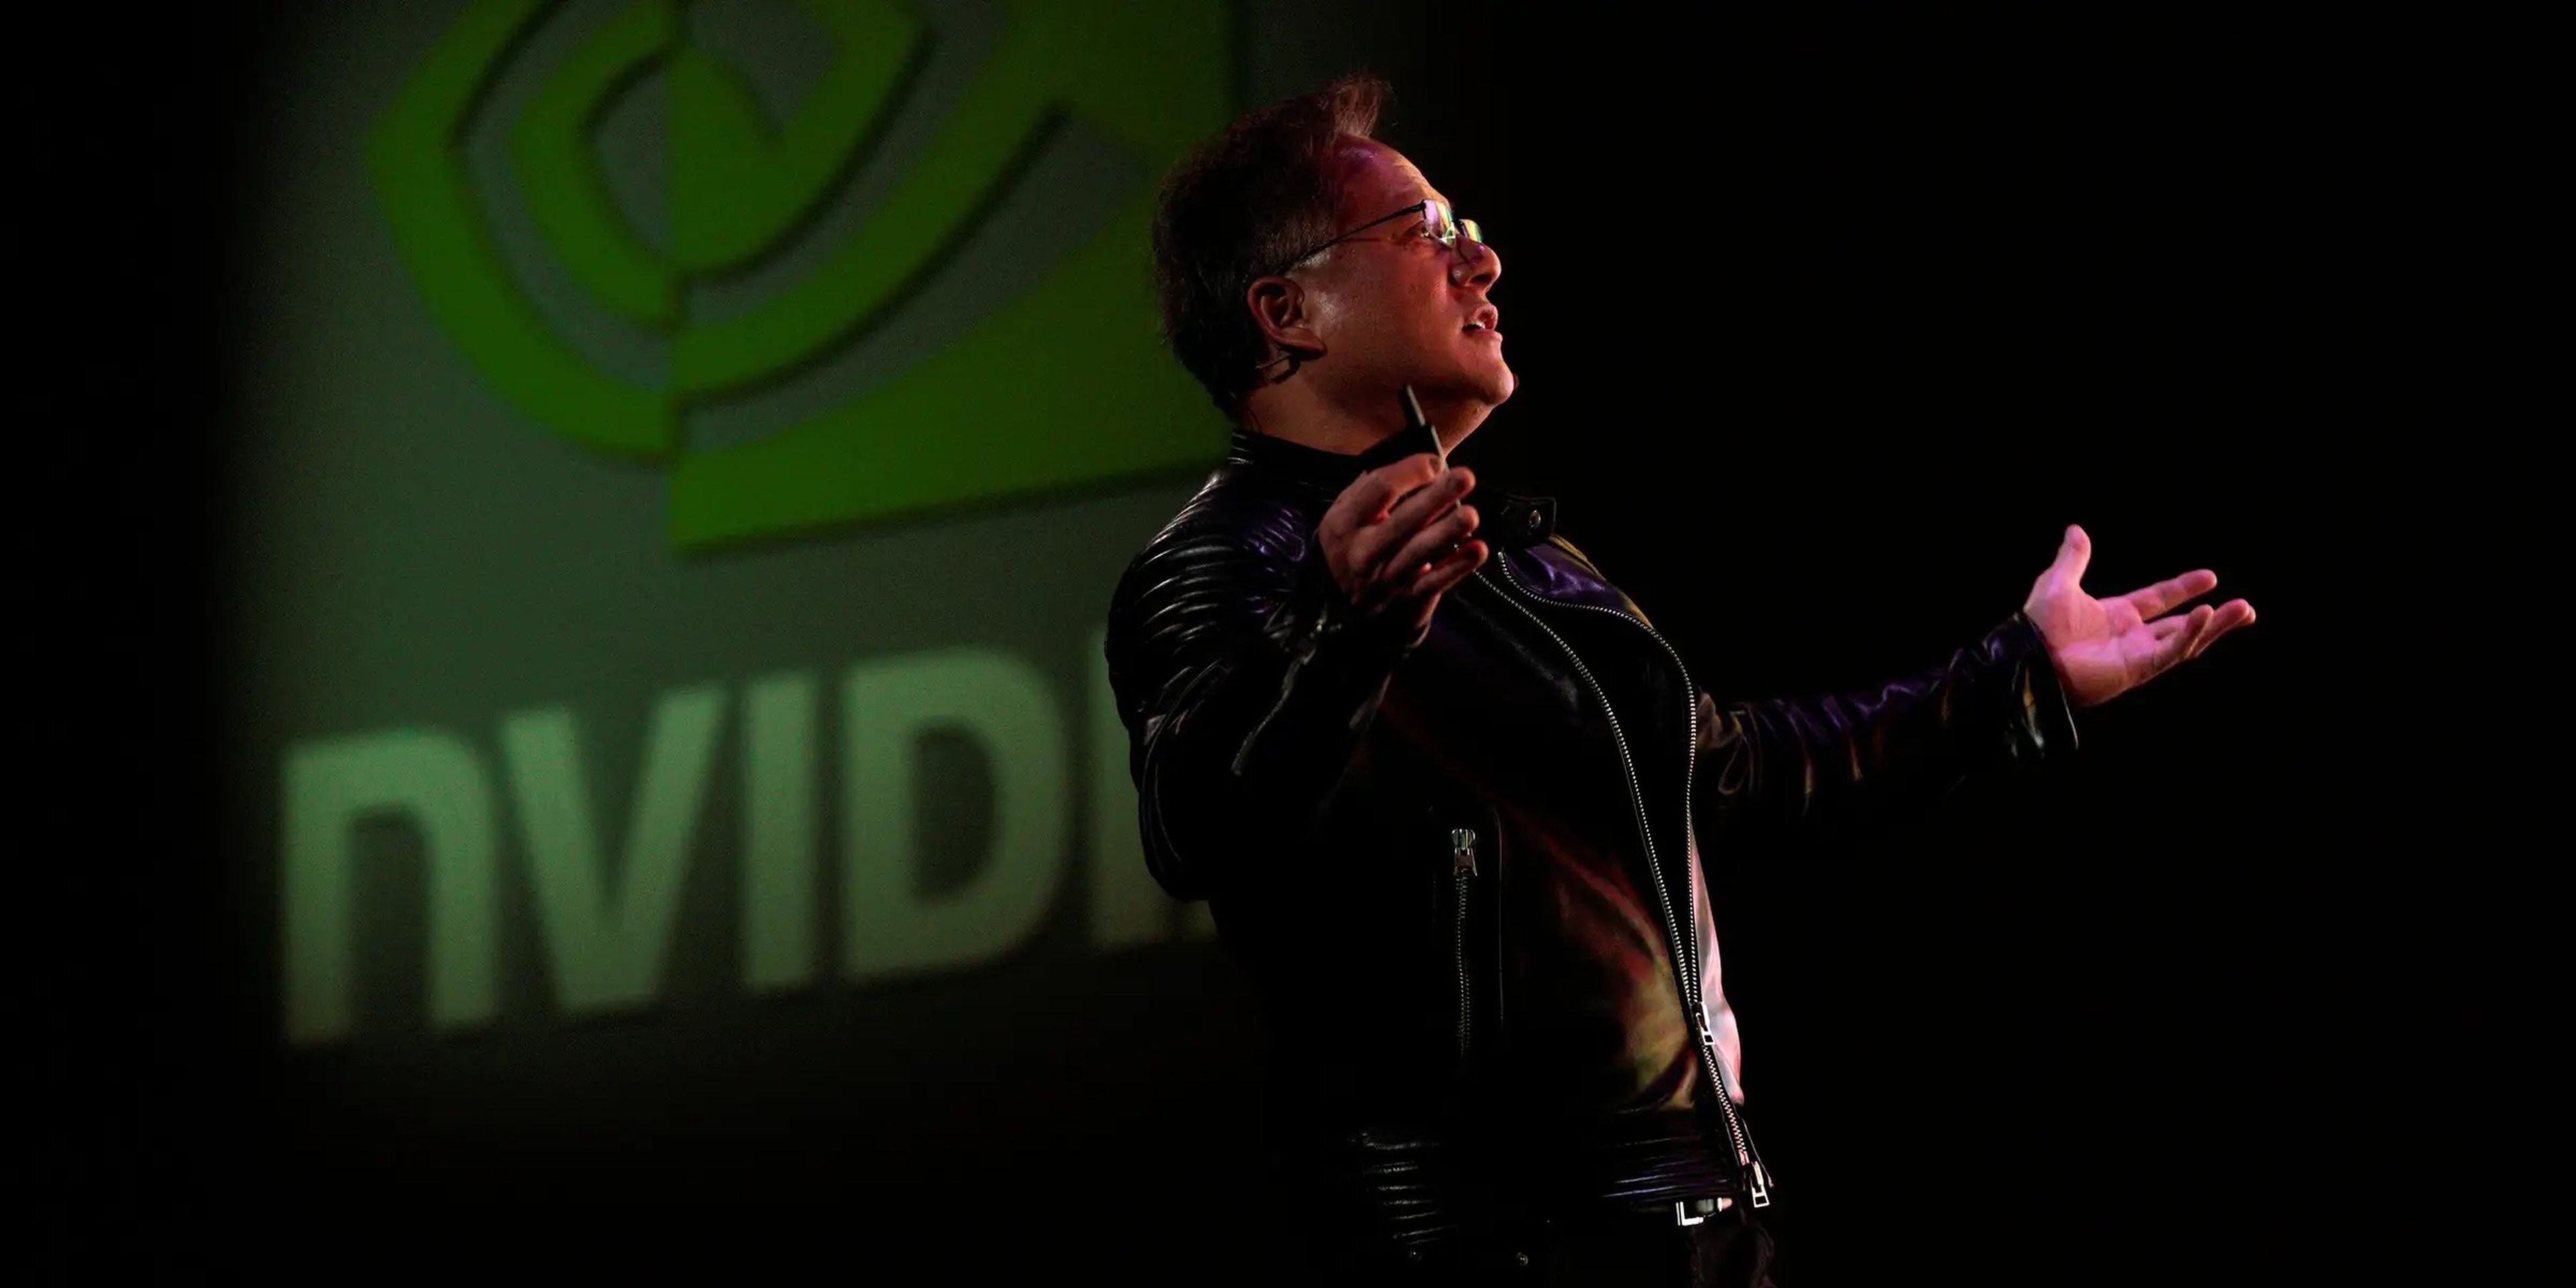 Jensen Huang, CEO de Nvidia.